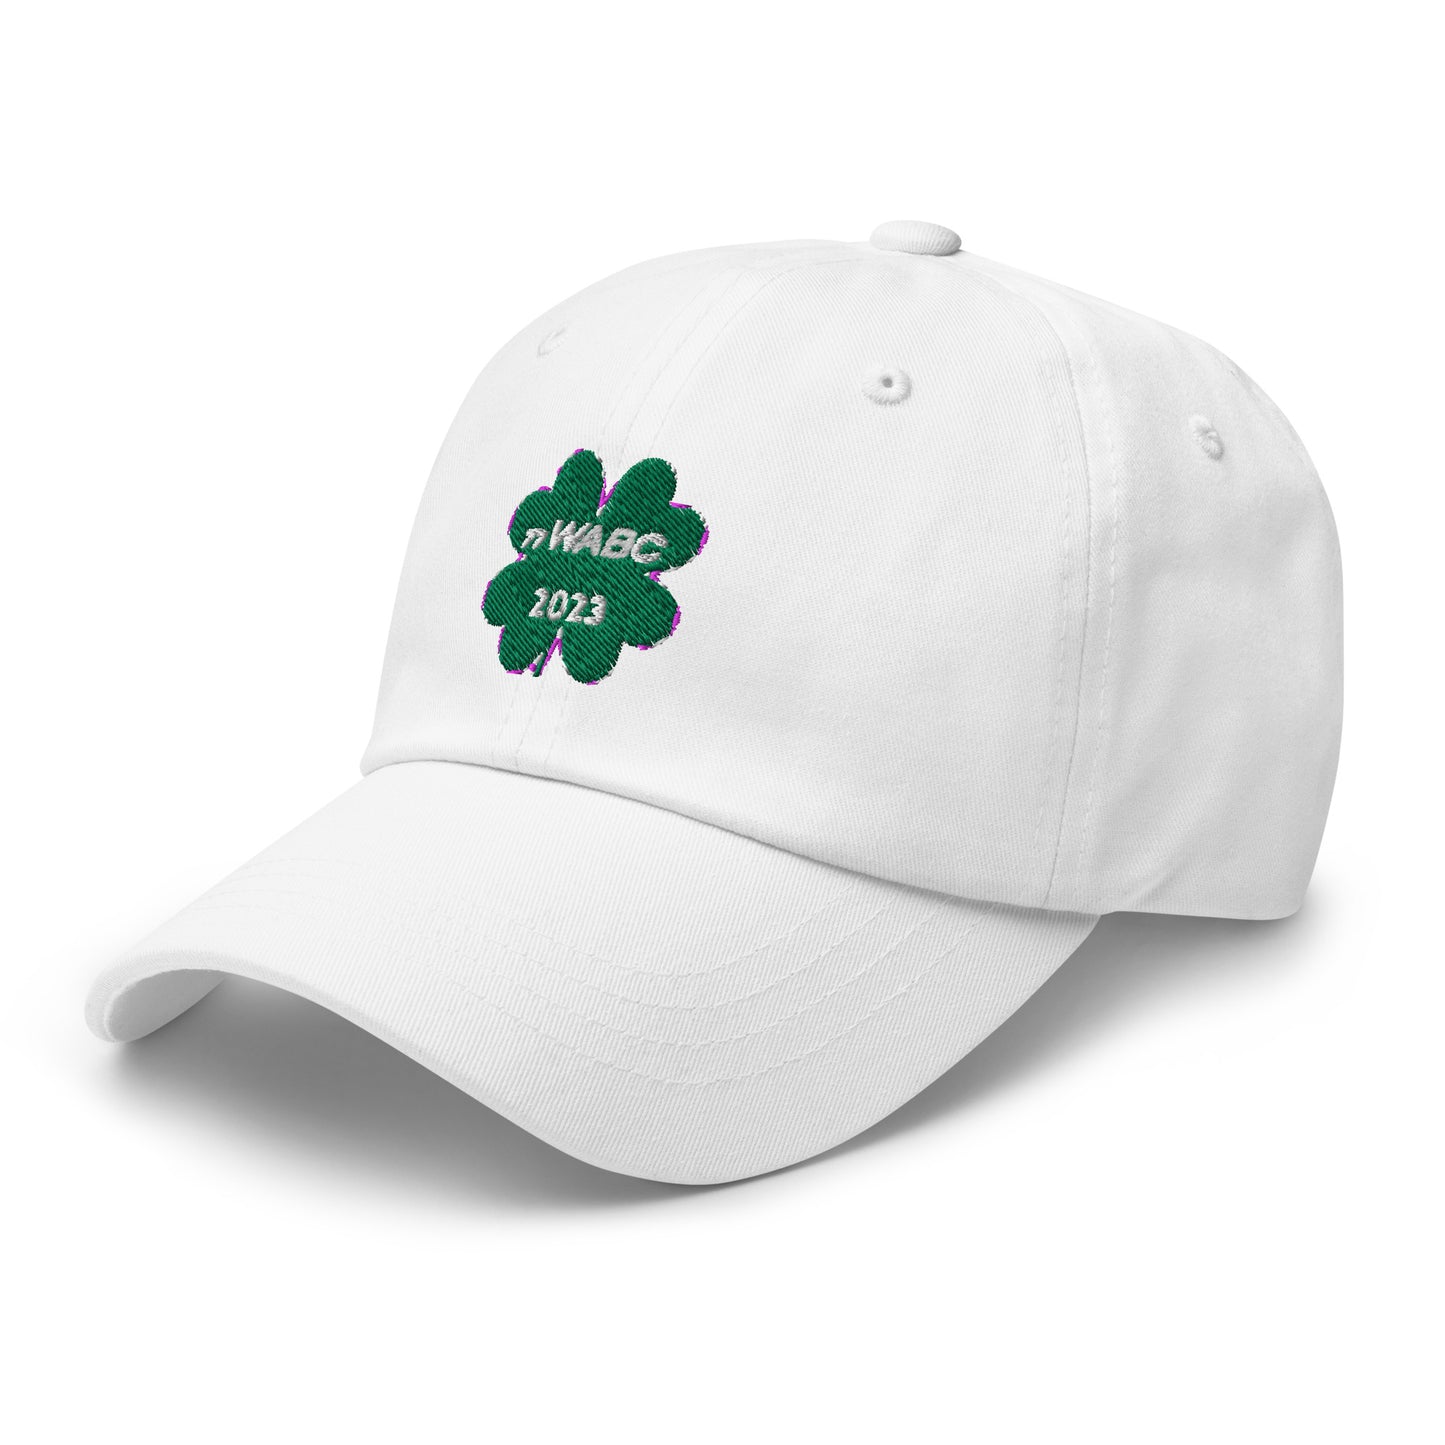 77 WABC St. Patrick's Day 2023 Hat!